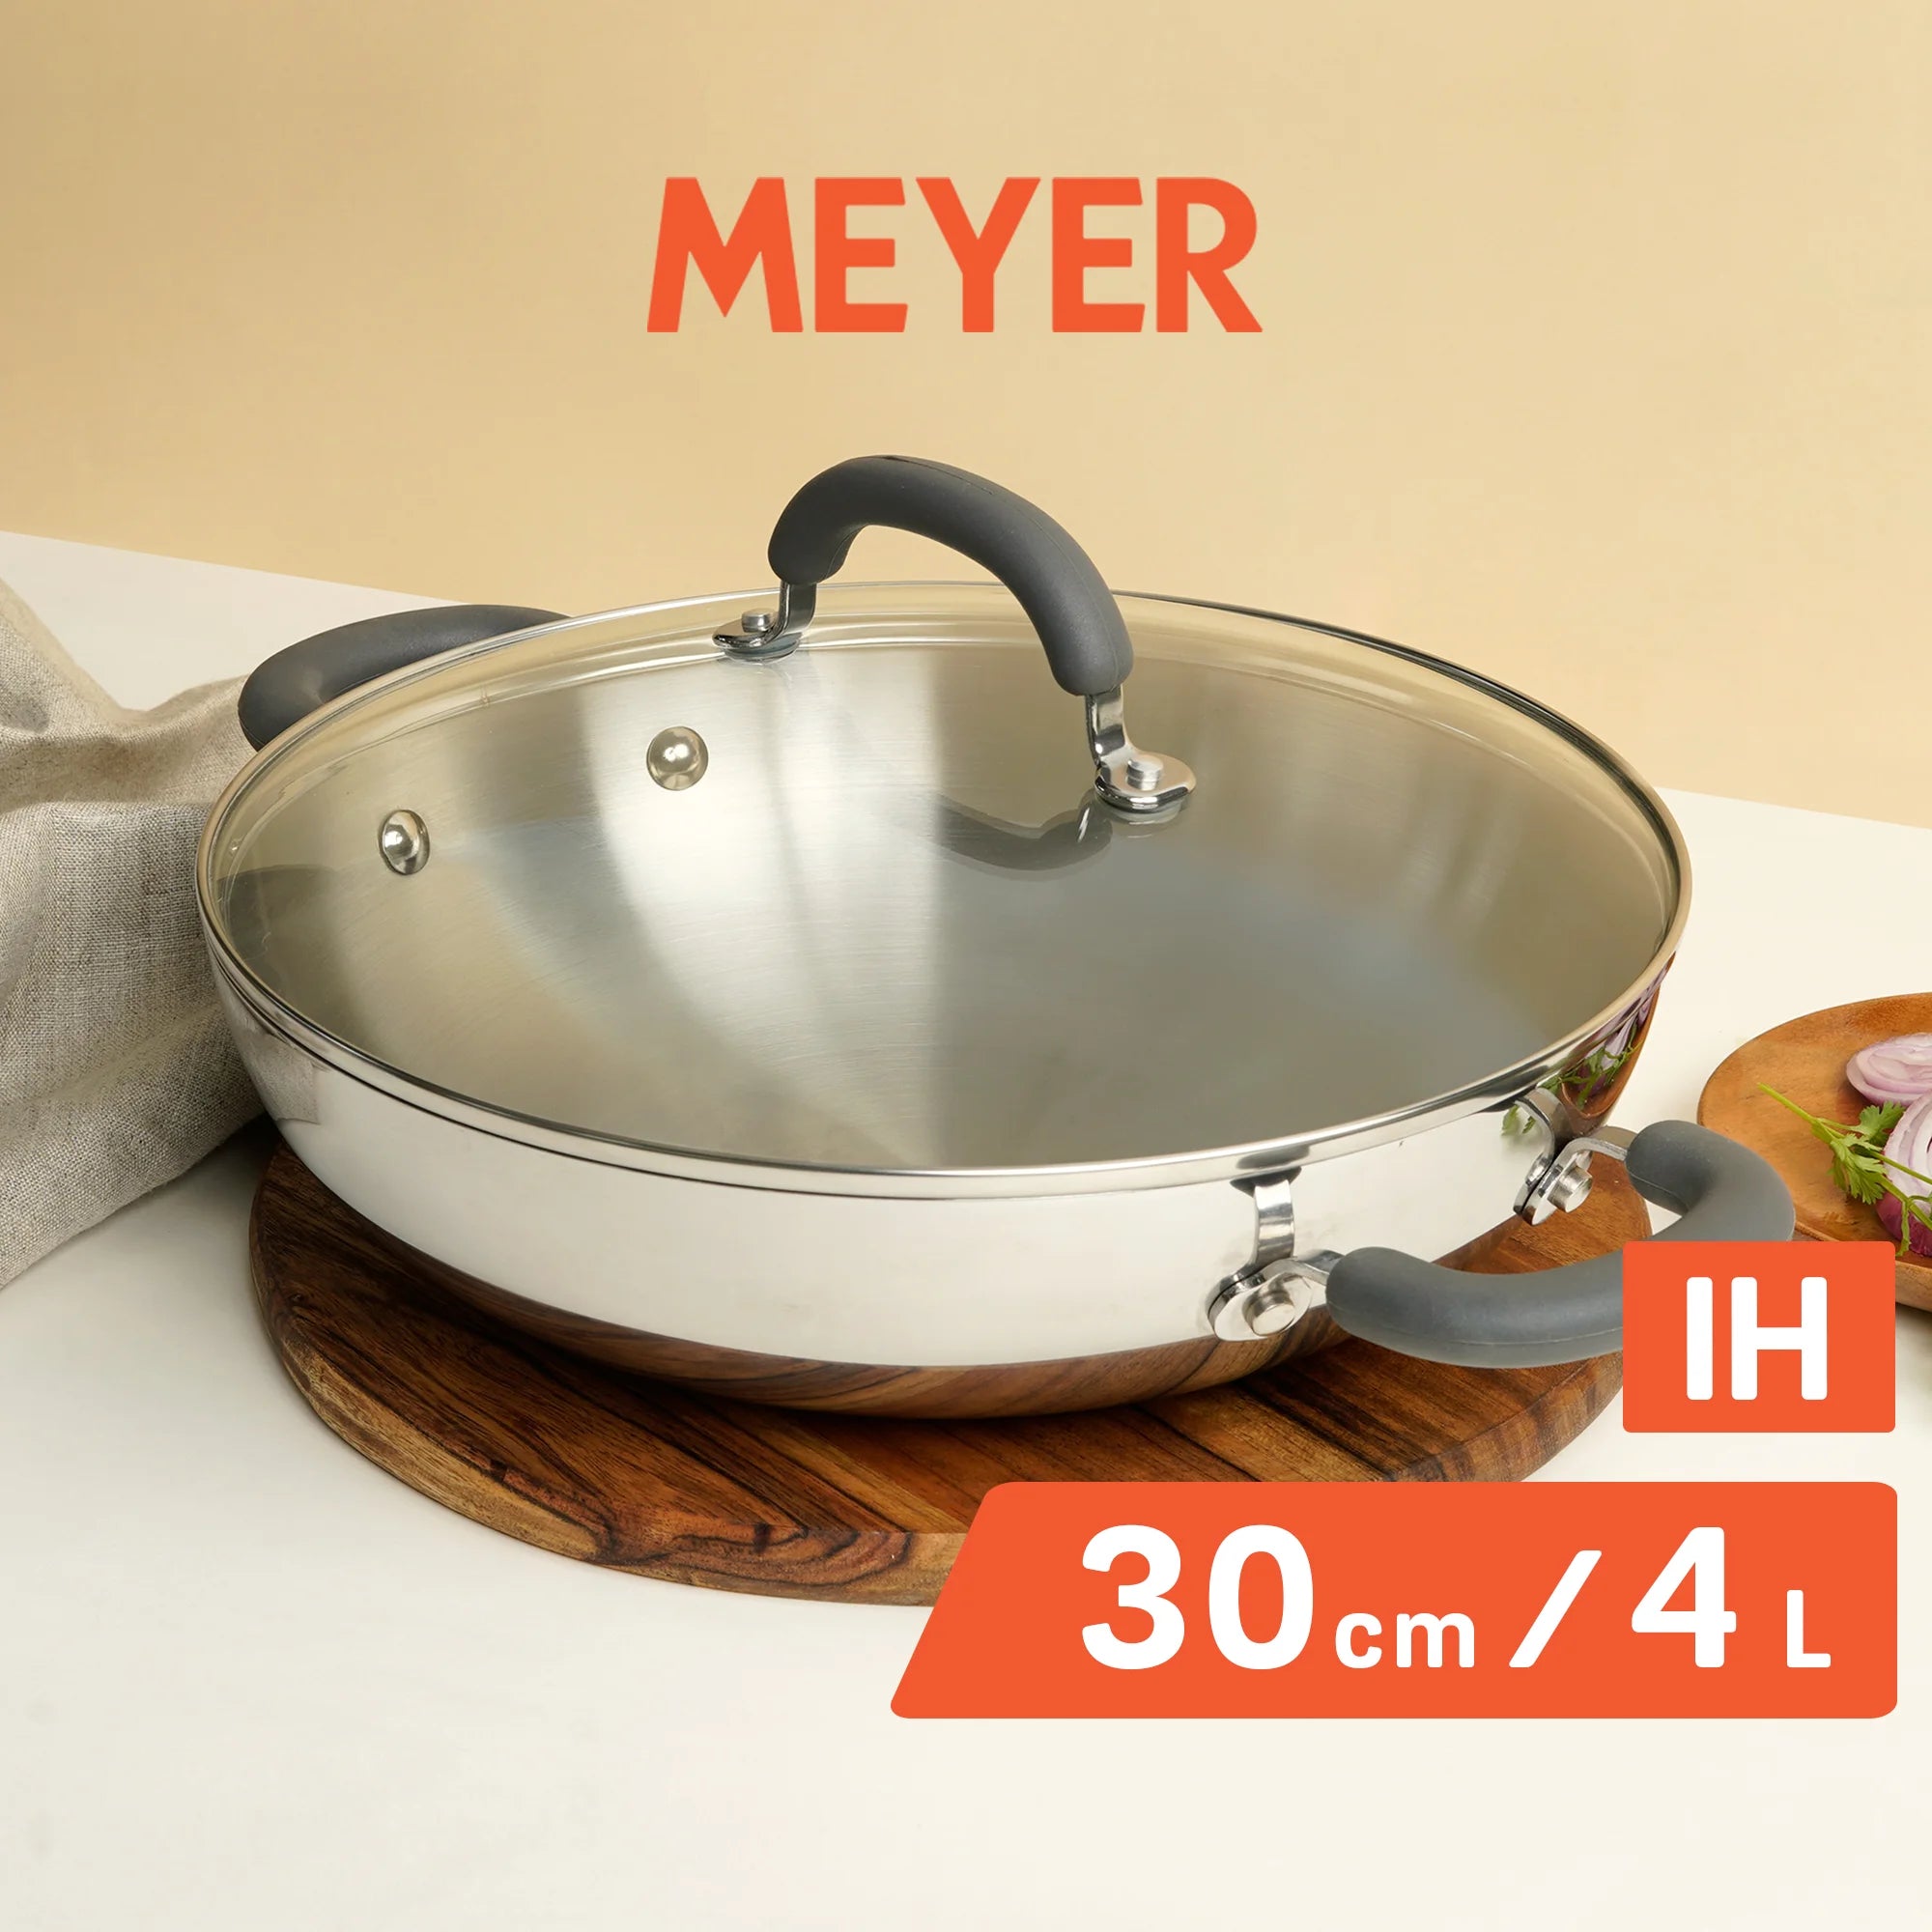 Meyer Trivantage Stainless Steel Triply Cookware Kadai / Wok with Lid, 30cm